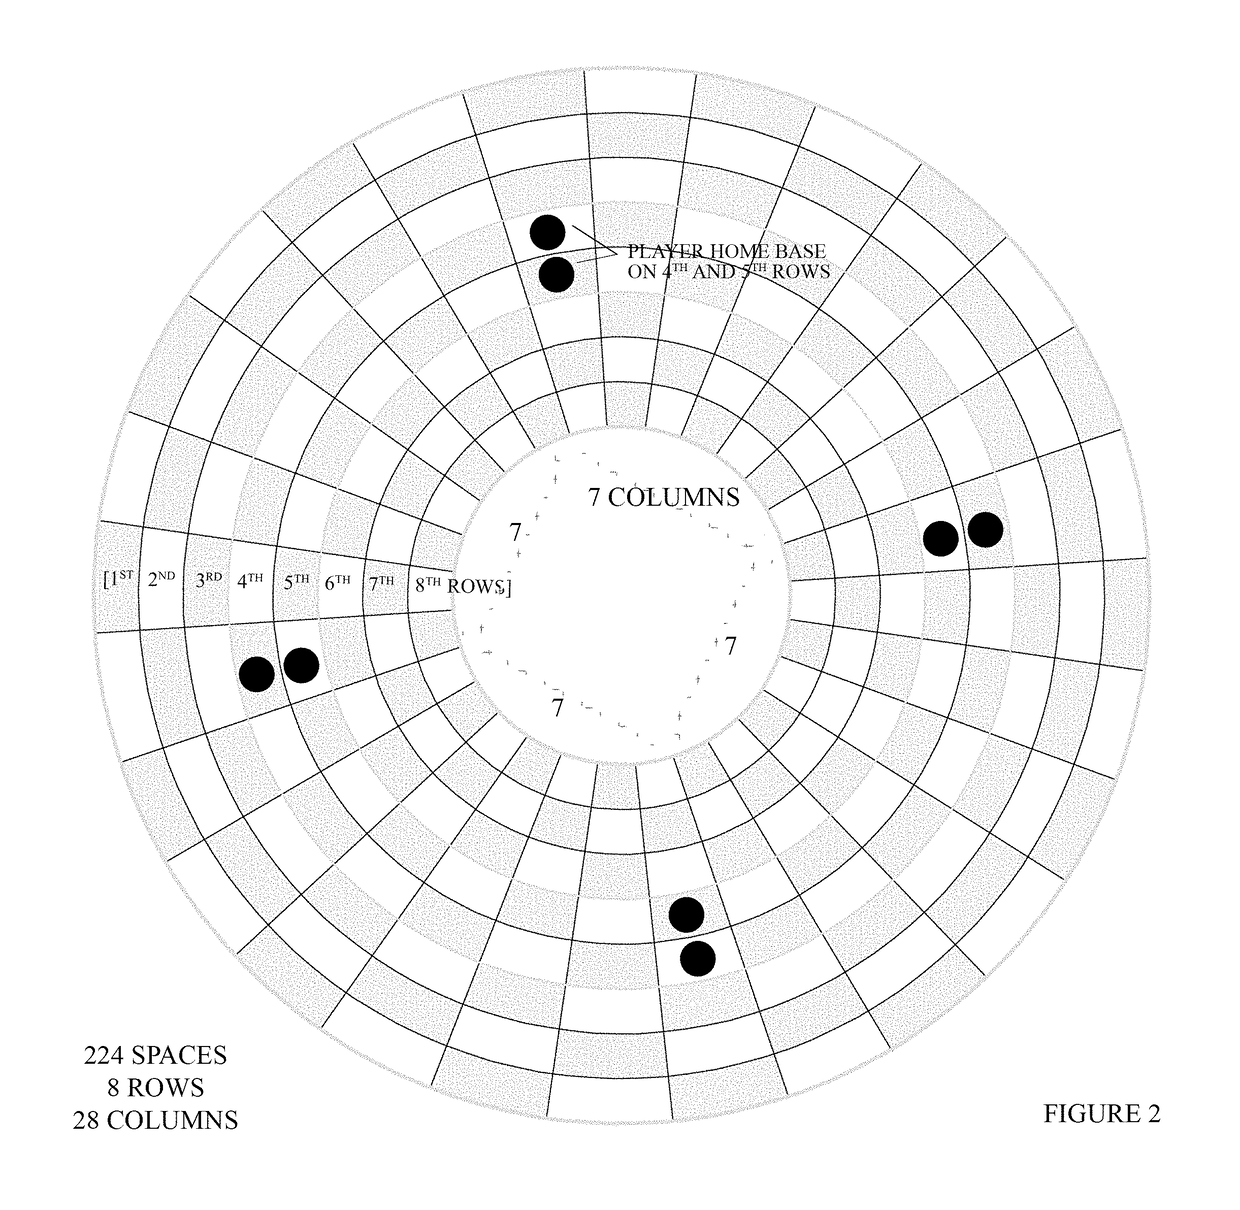 Circular Checkered Game Board and Method of Play